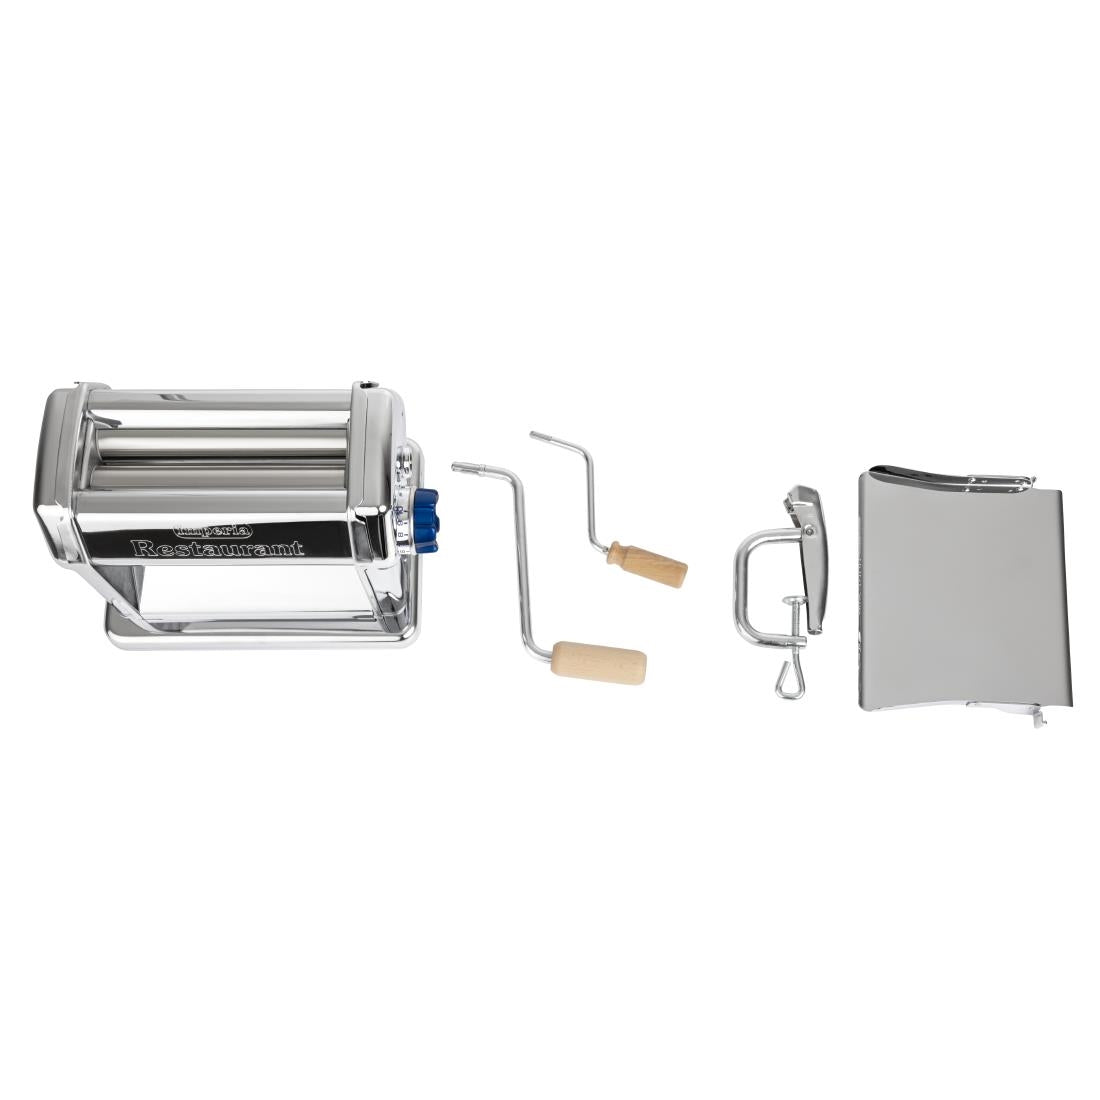 Imperia Manual Pasta Machine K581 JD Catering Equipment Solutions Ltd